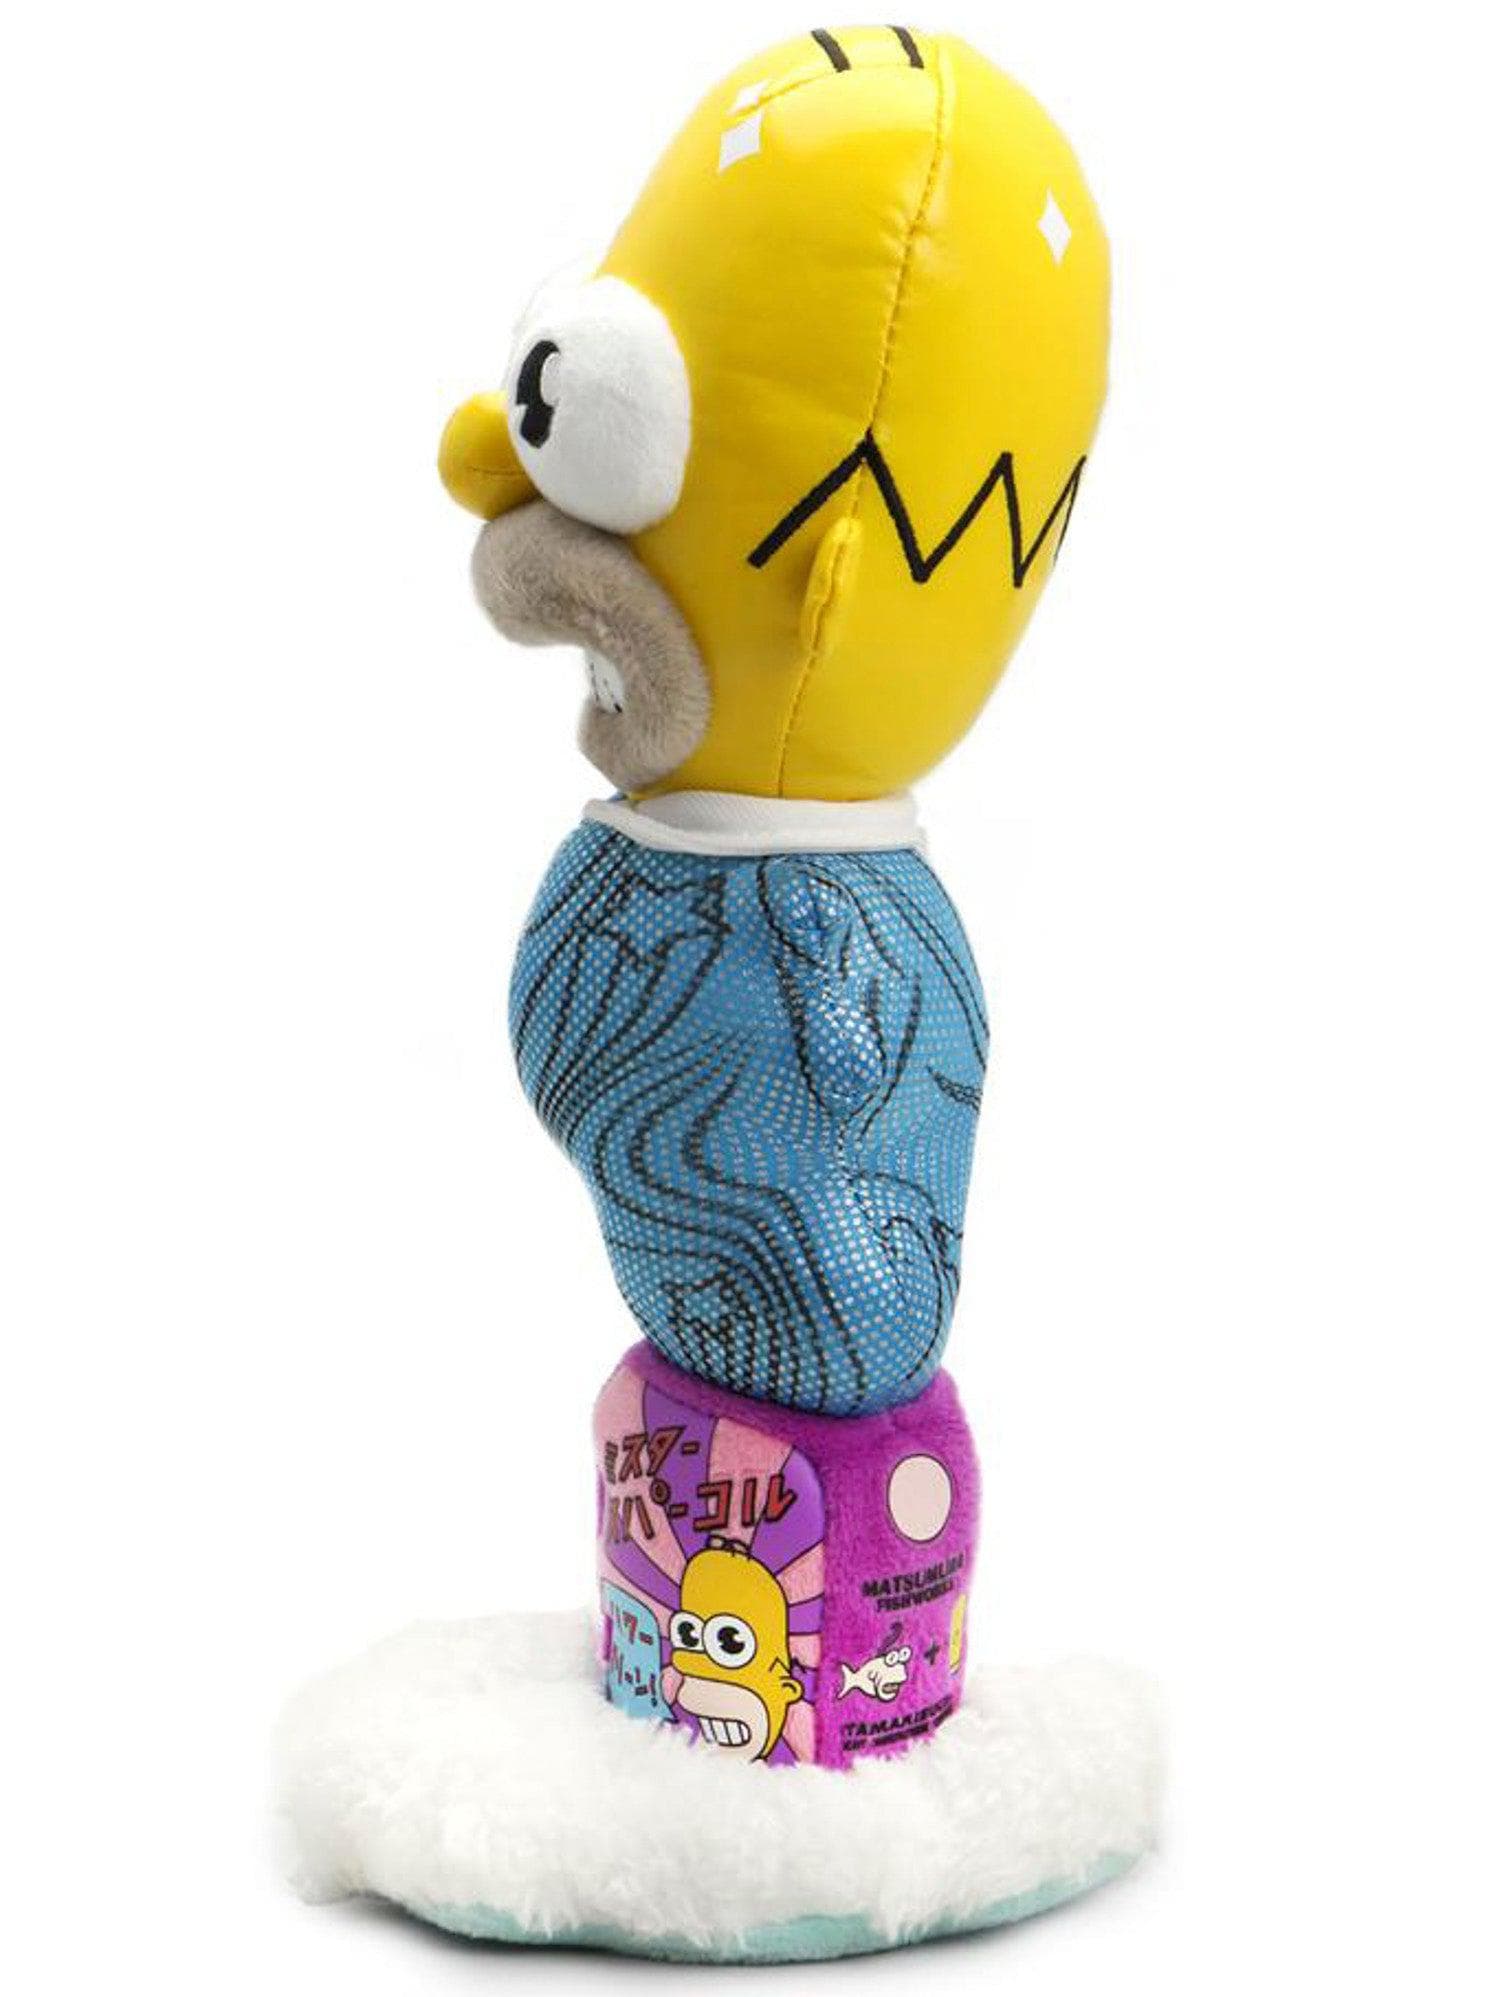 Kidrobot - The Simpsons Mr. Sparkle 11" Plush - costumes.com